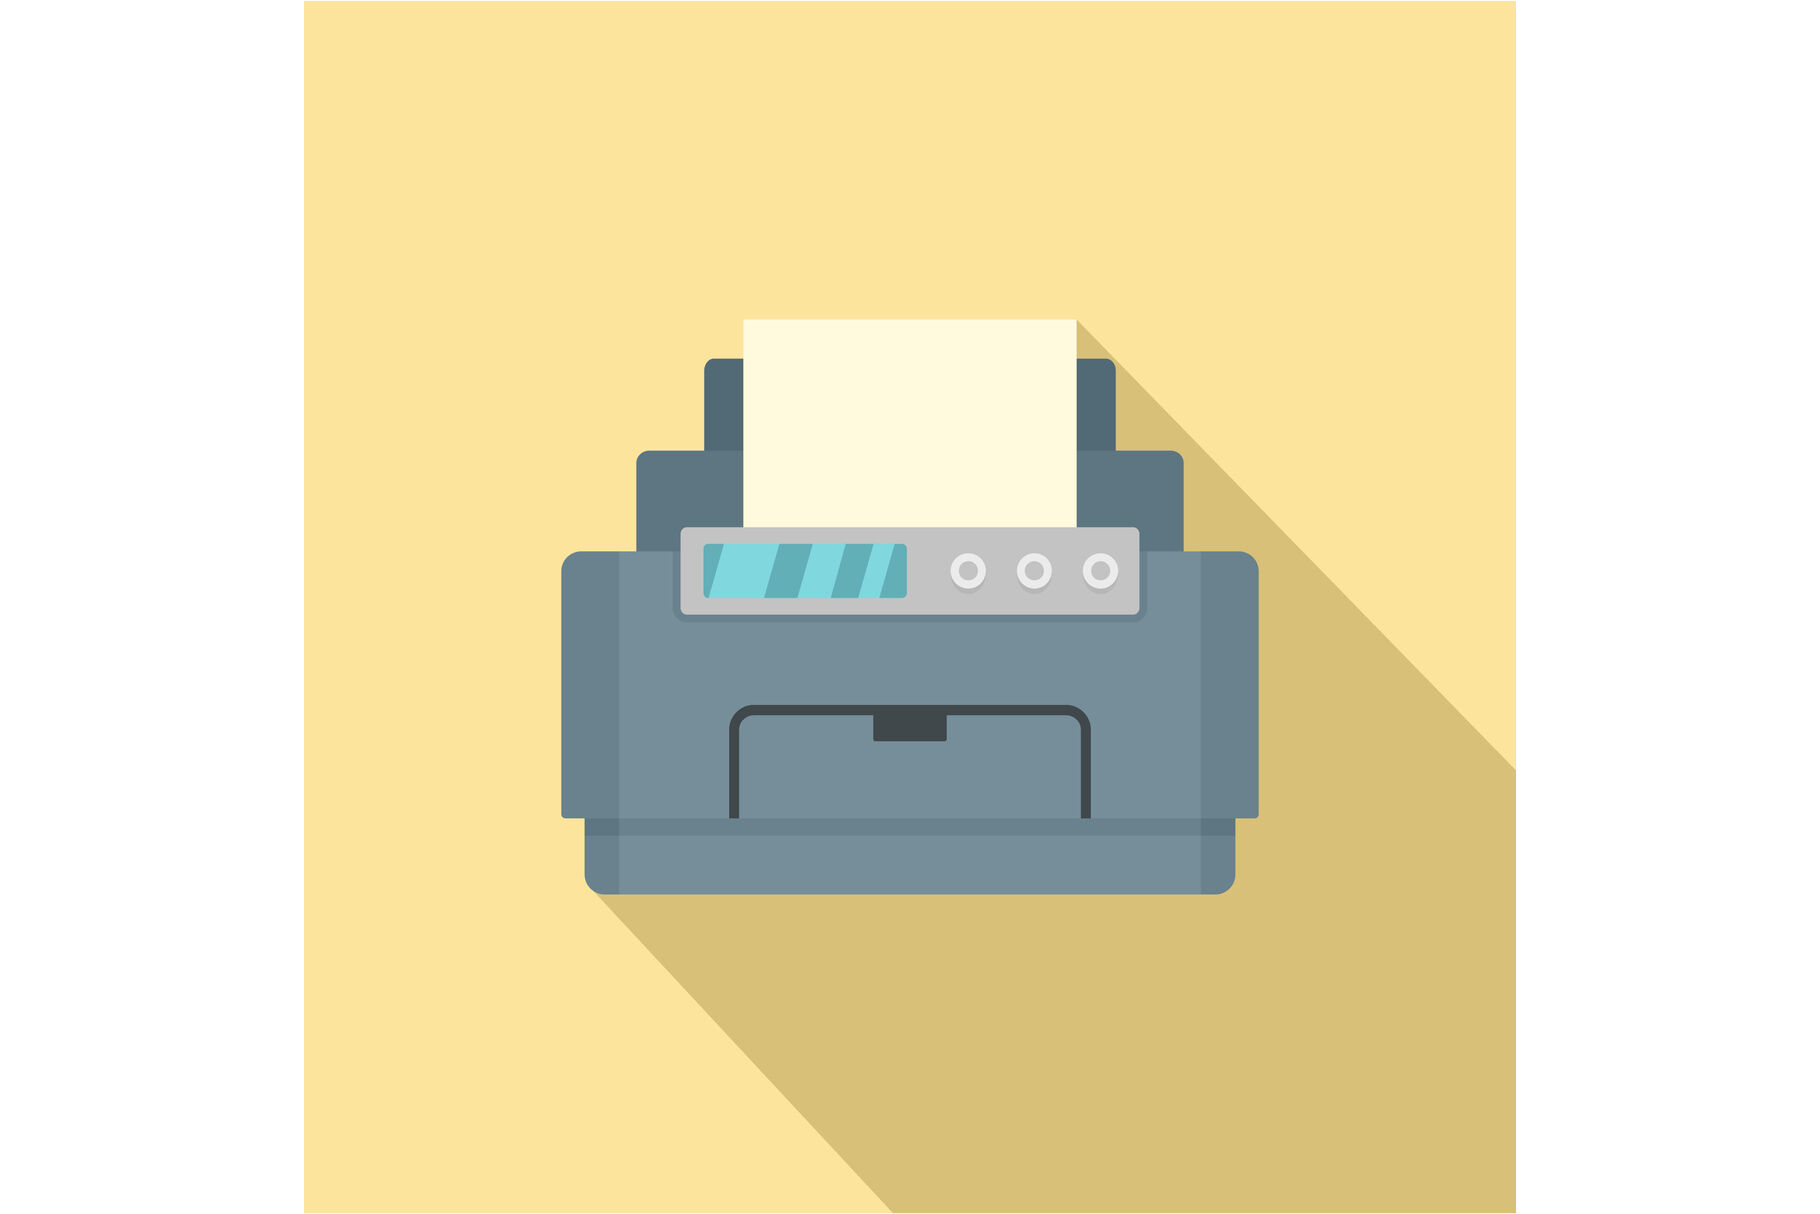 laser printer icon